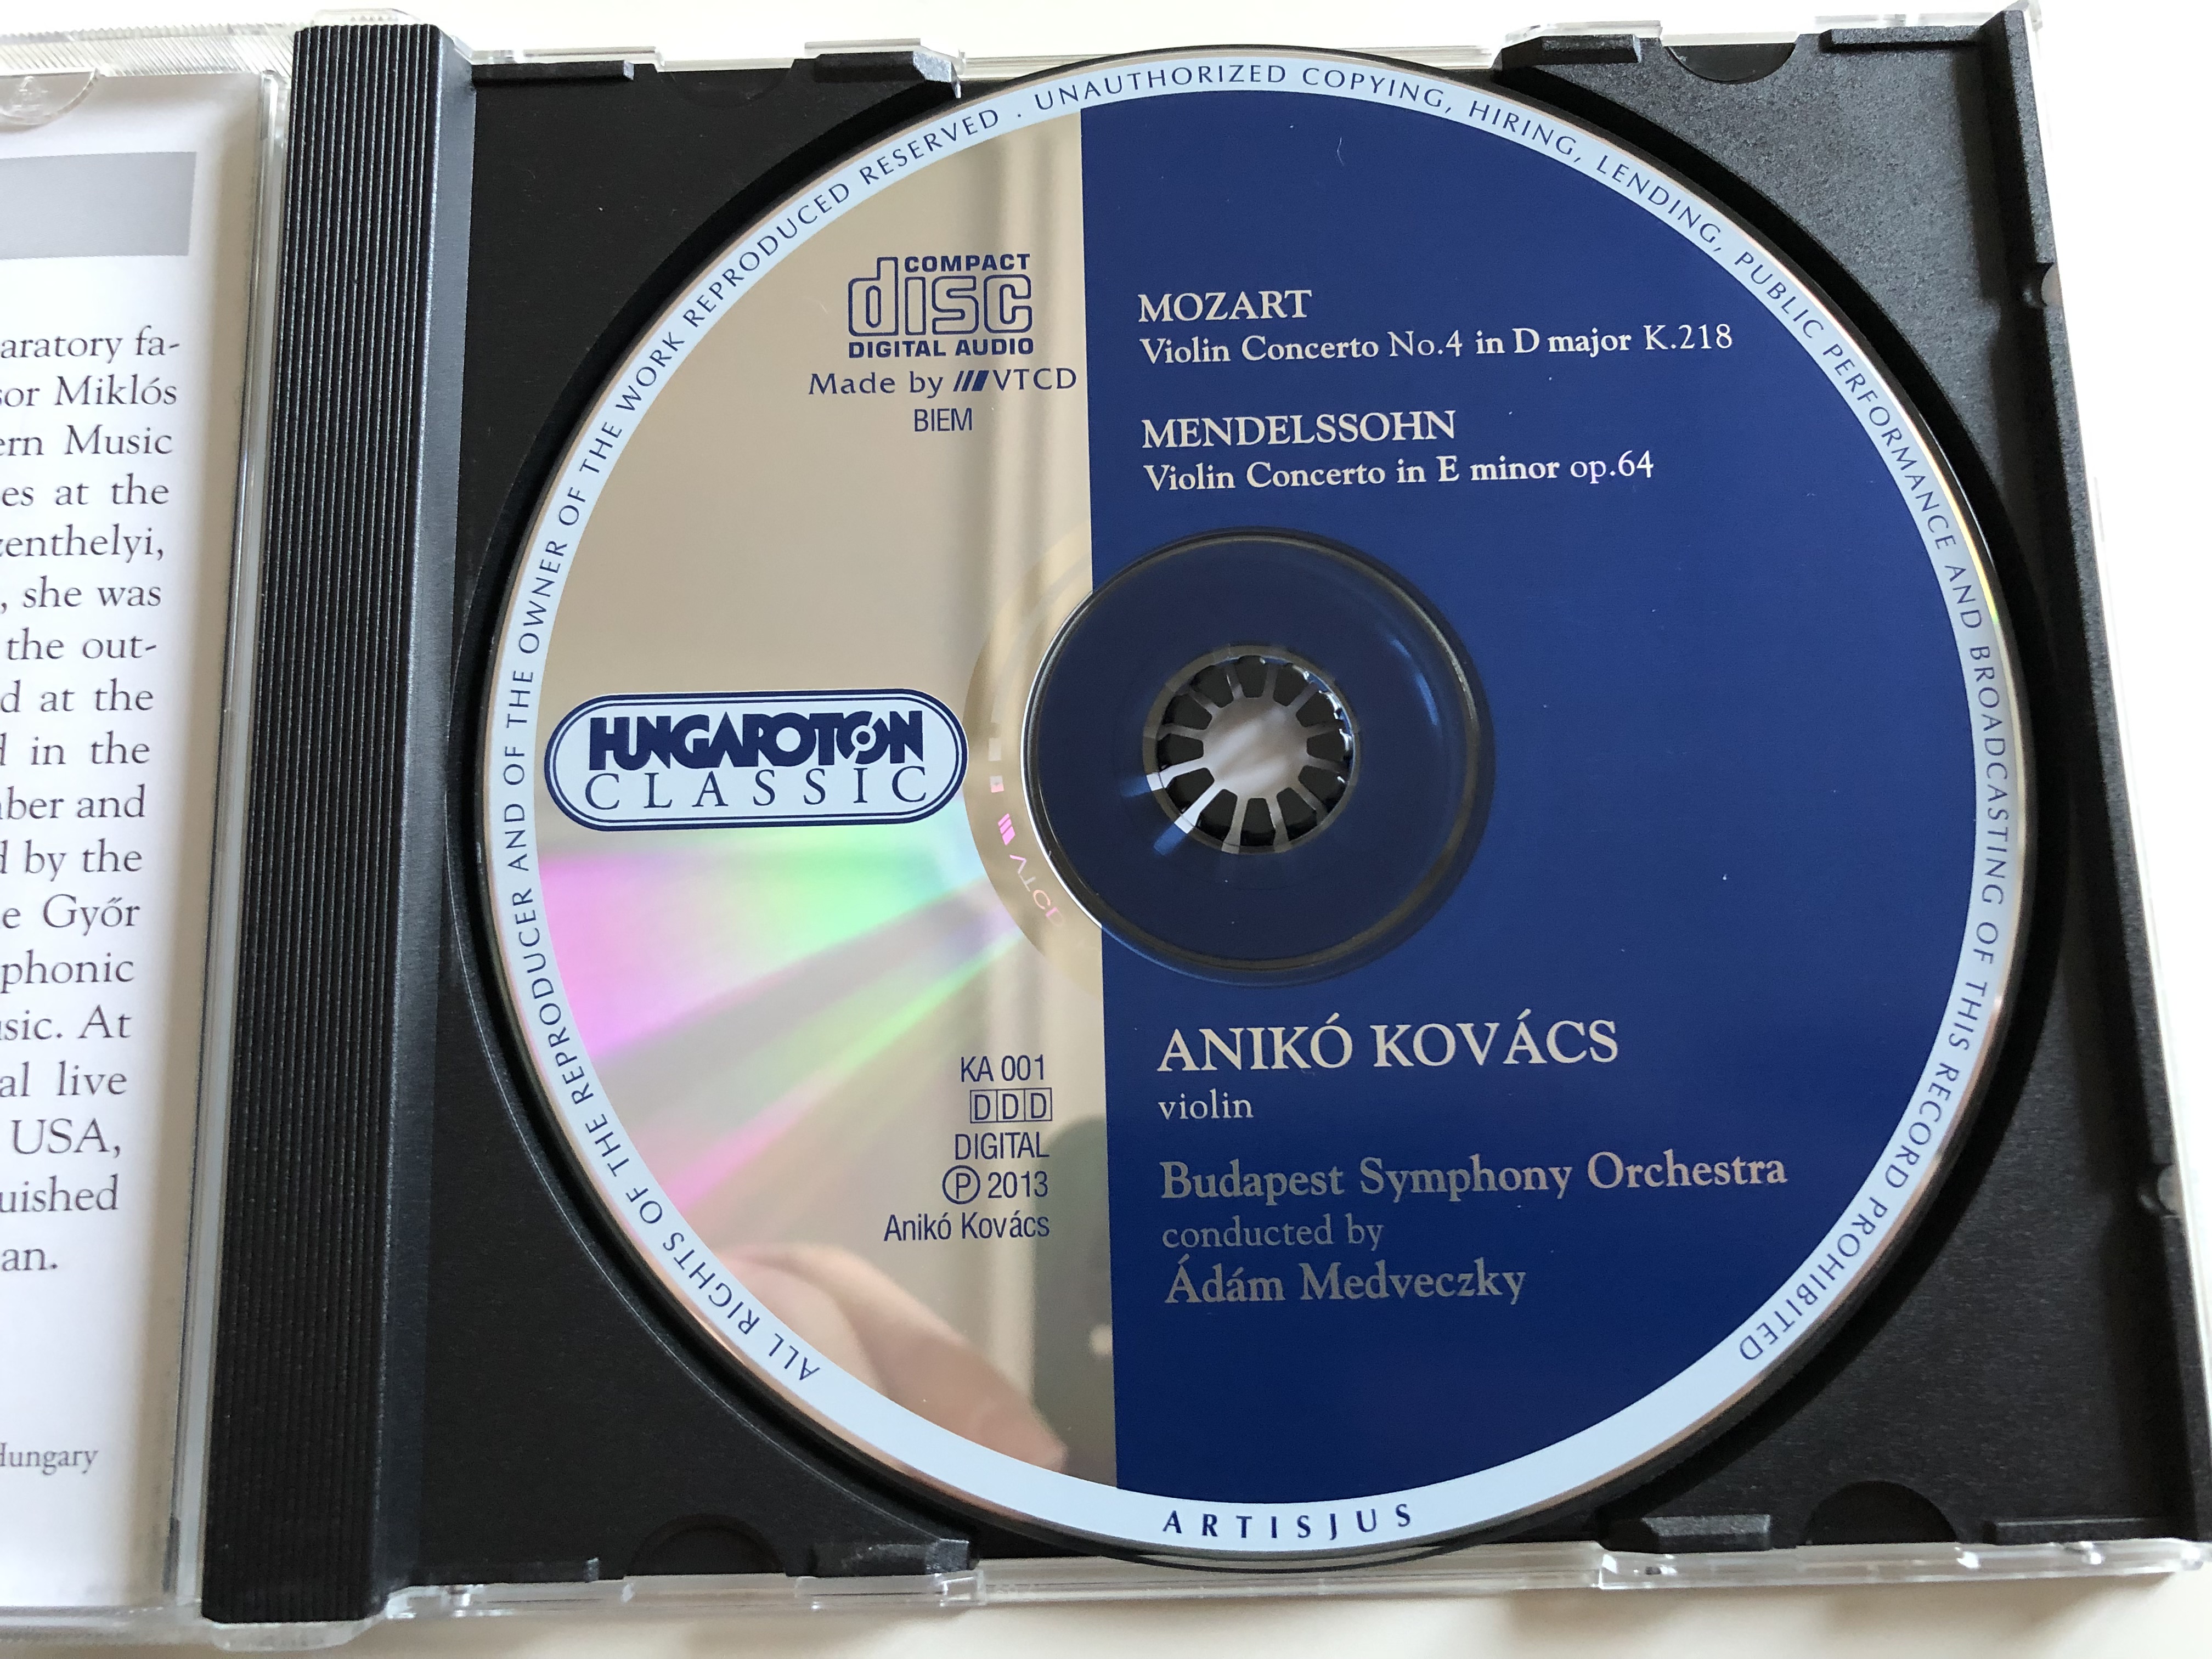 mozart-violin-concerto-no.-4-in-d-major-k.-218-mendelssohn-violin-concerto-in-e-minor-op.-64-aniko-kovacs-budapest-symphony-orchestra-conducted-by-adam-medveczky-hungaroton-classic-audio-cd-5-.jpg